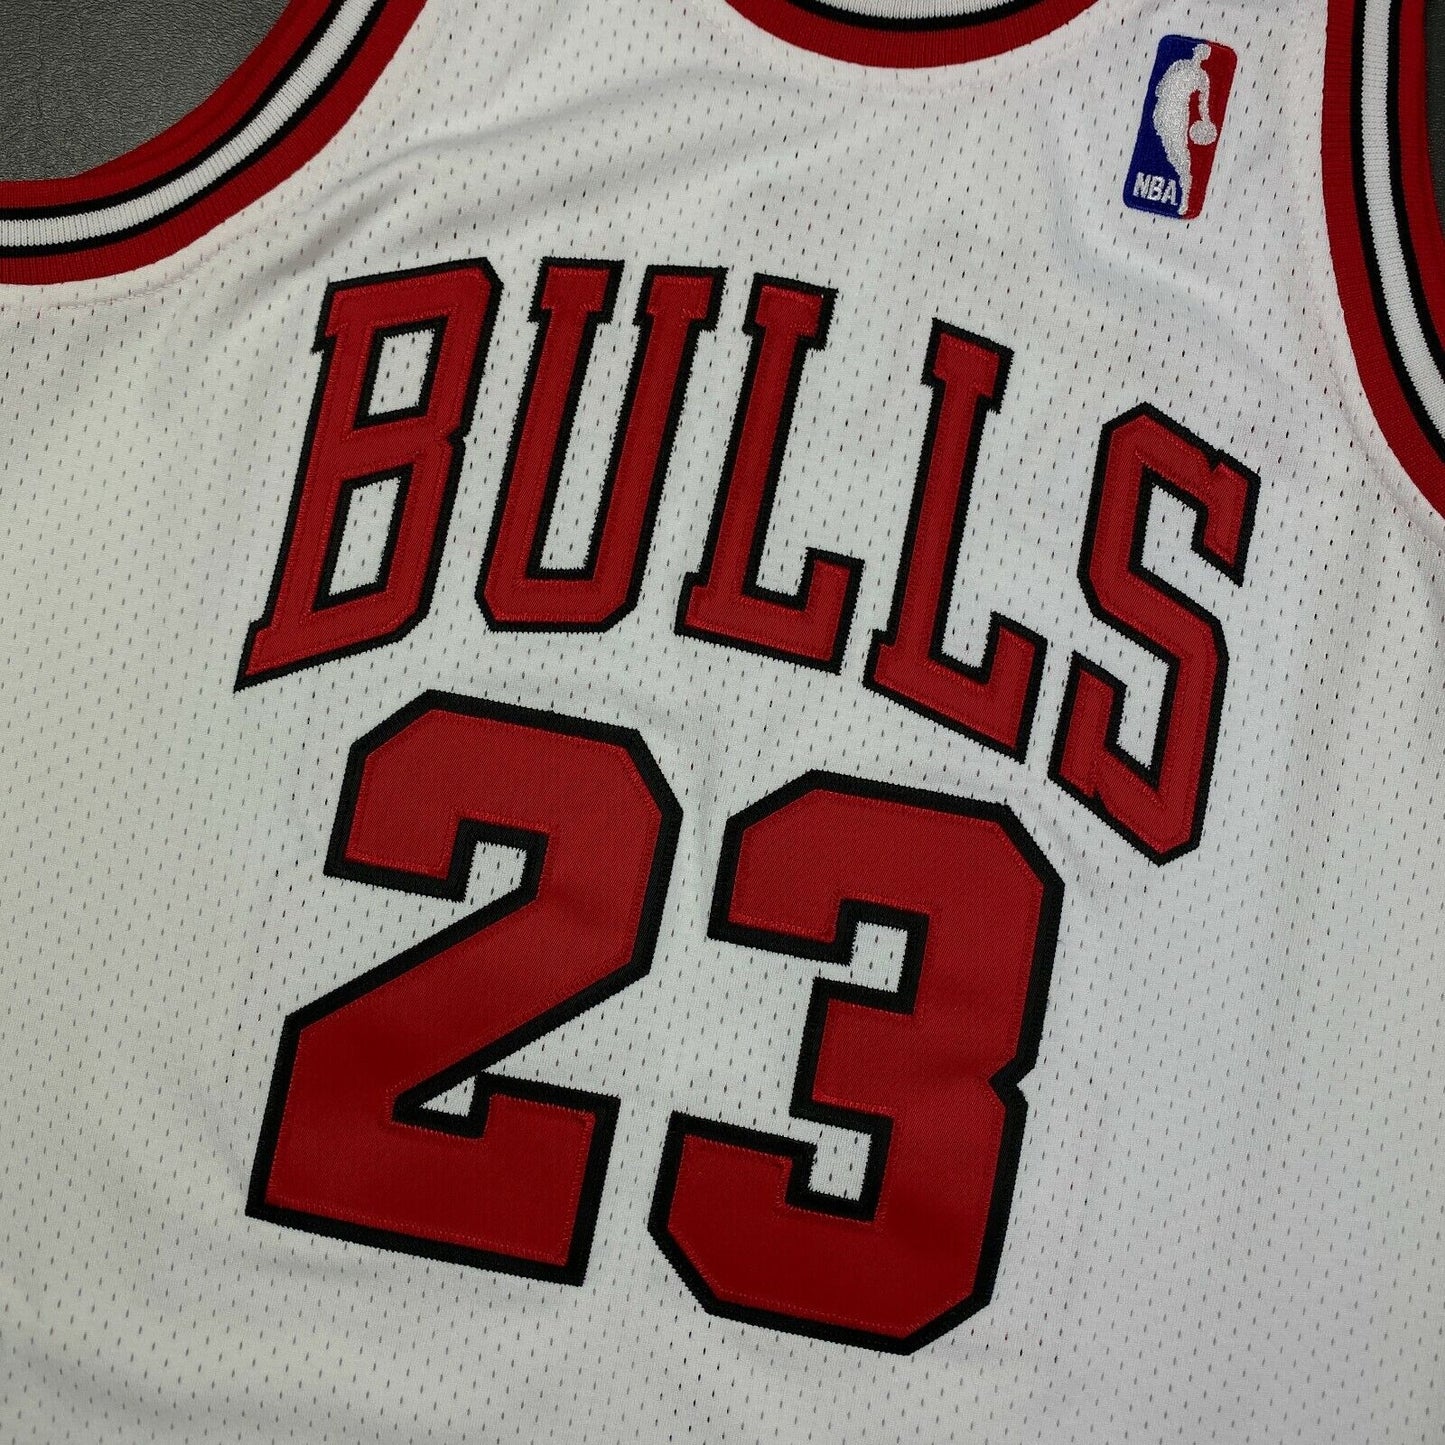 100% Authentic Michael Jordan Mitchell Ness 97 98 Bulls Jersey M 10/12 Youth Boy